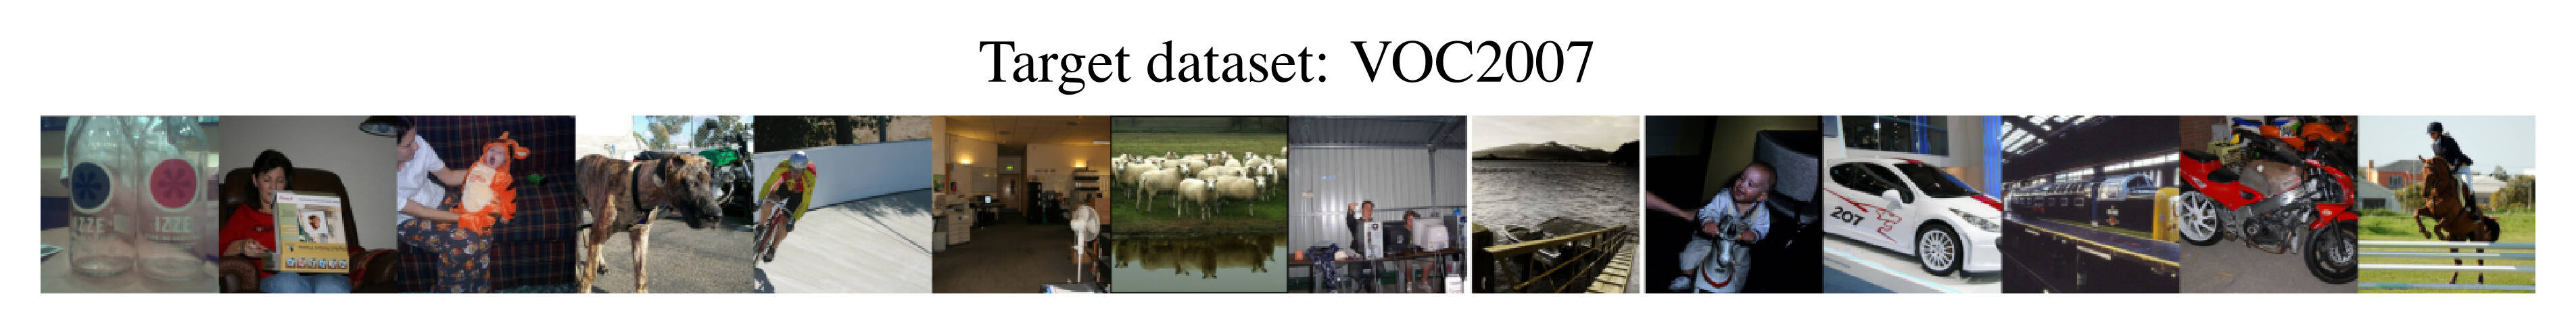 VOC target dataset.